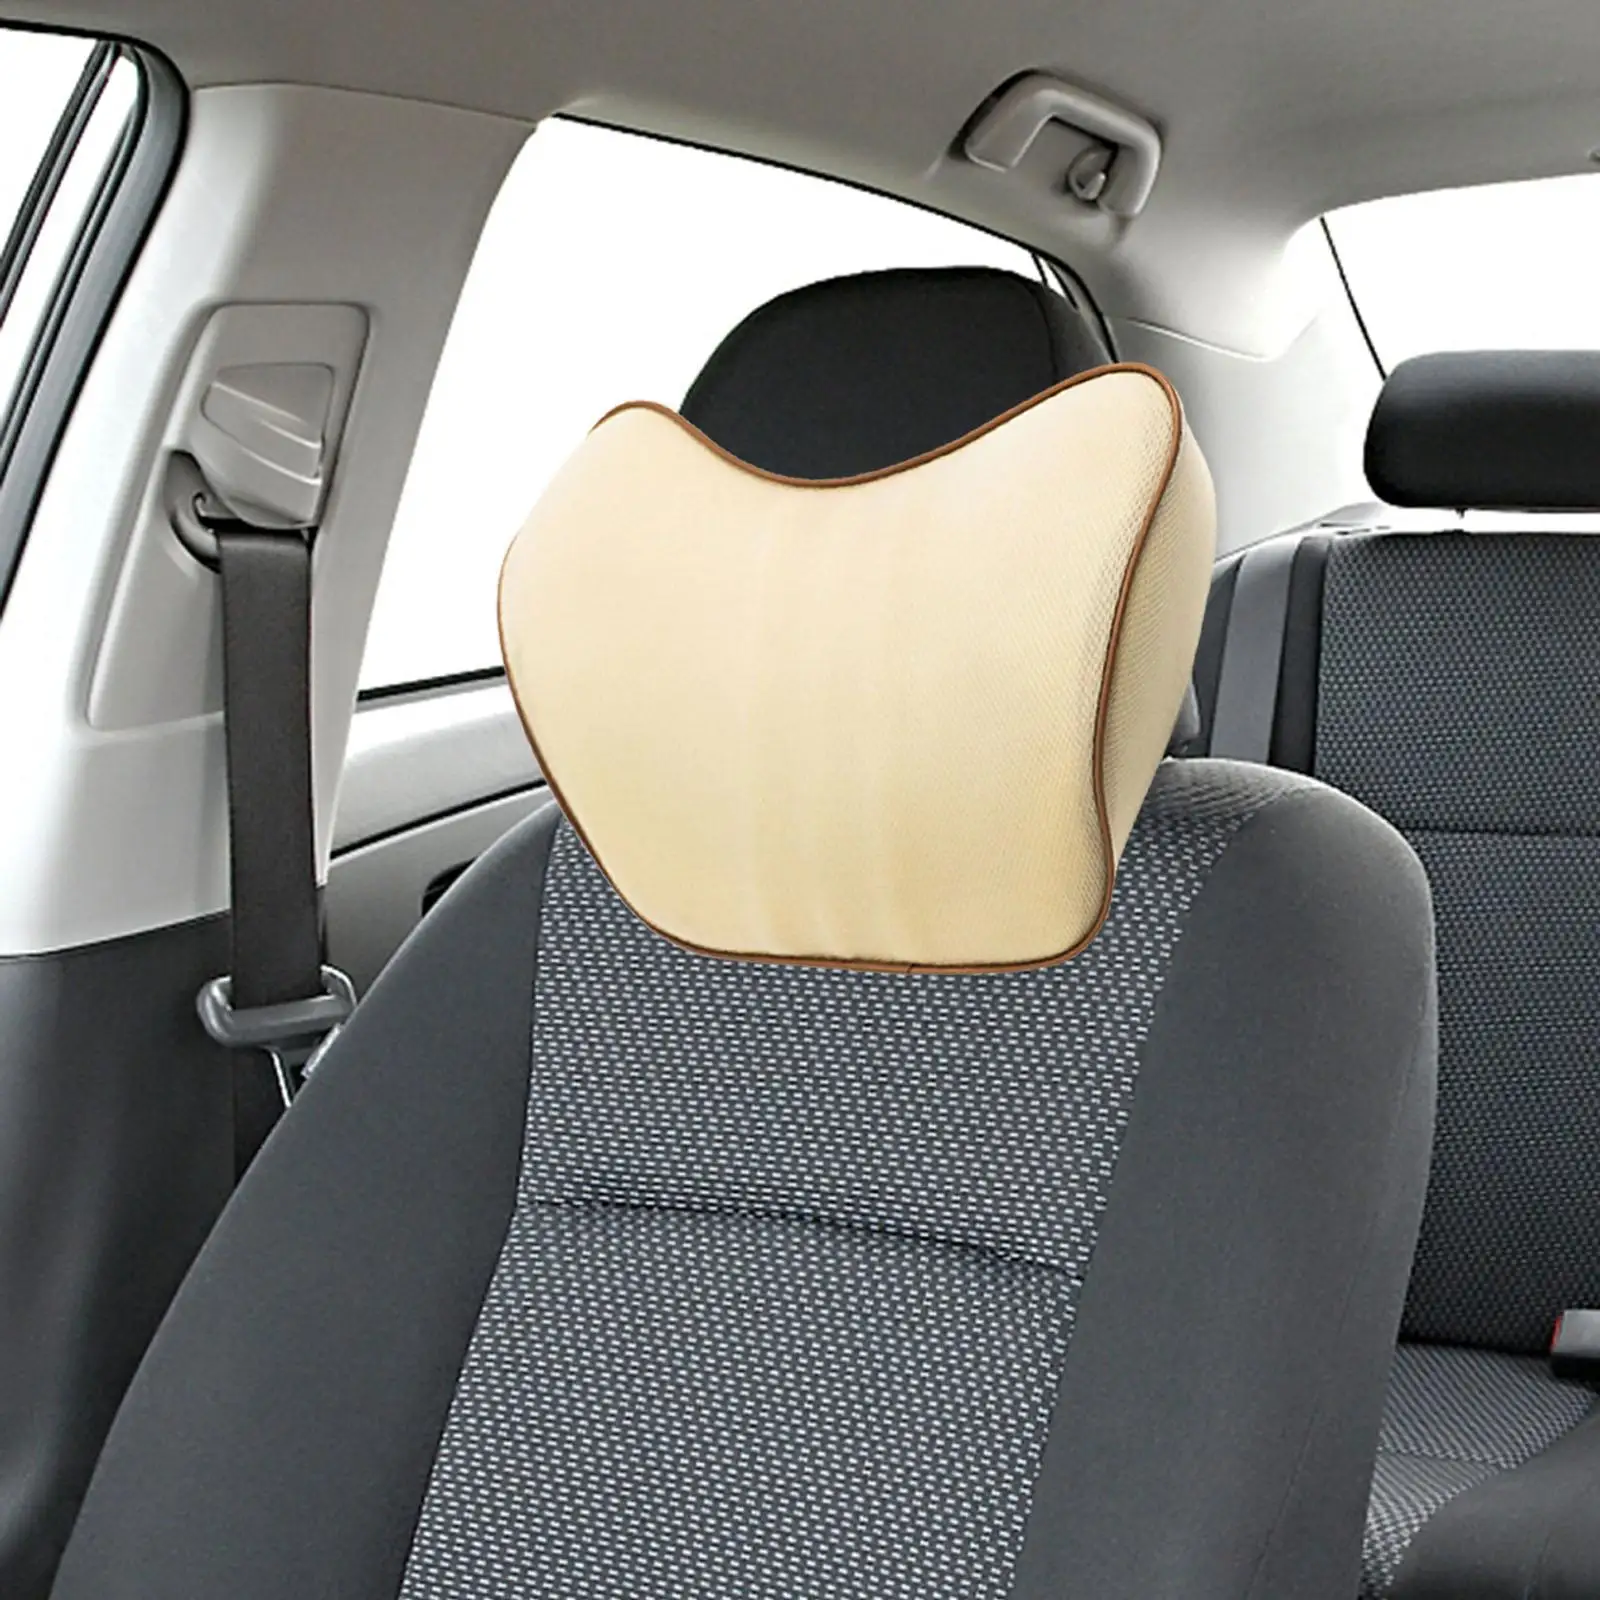 Car Neck Cushion Car Seat Headrest Lumbar Support Neck Rest Cushion Soft for Car Seat Office/Computer Chair